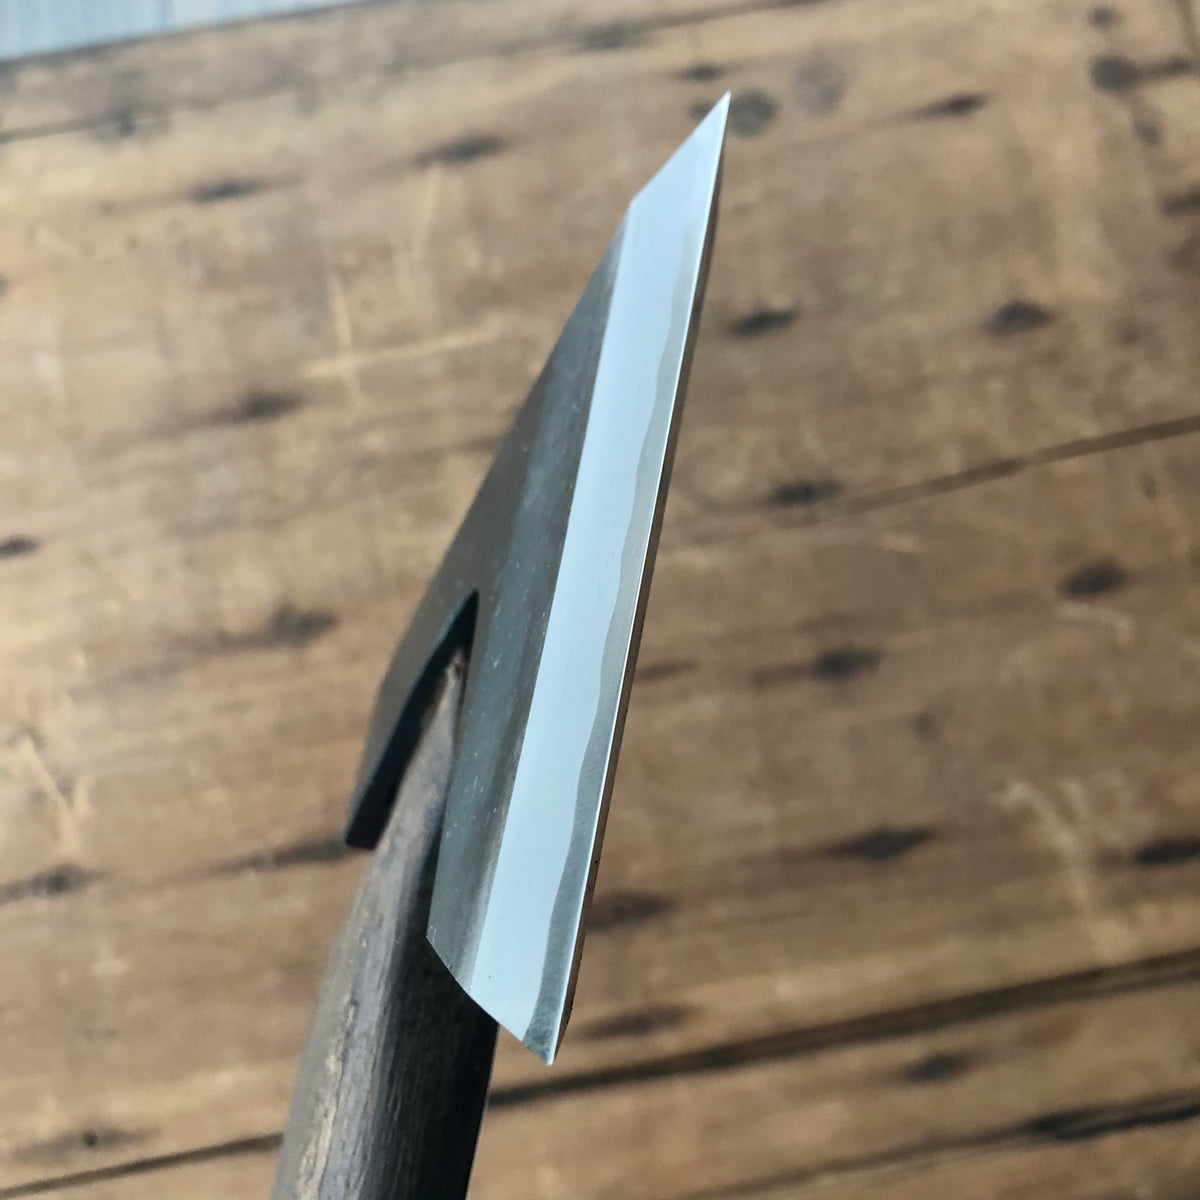 Mizuno Jigata Hand Axe Curved Burnt Kanto Oak Handle – Bernal Cutlery